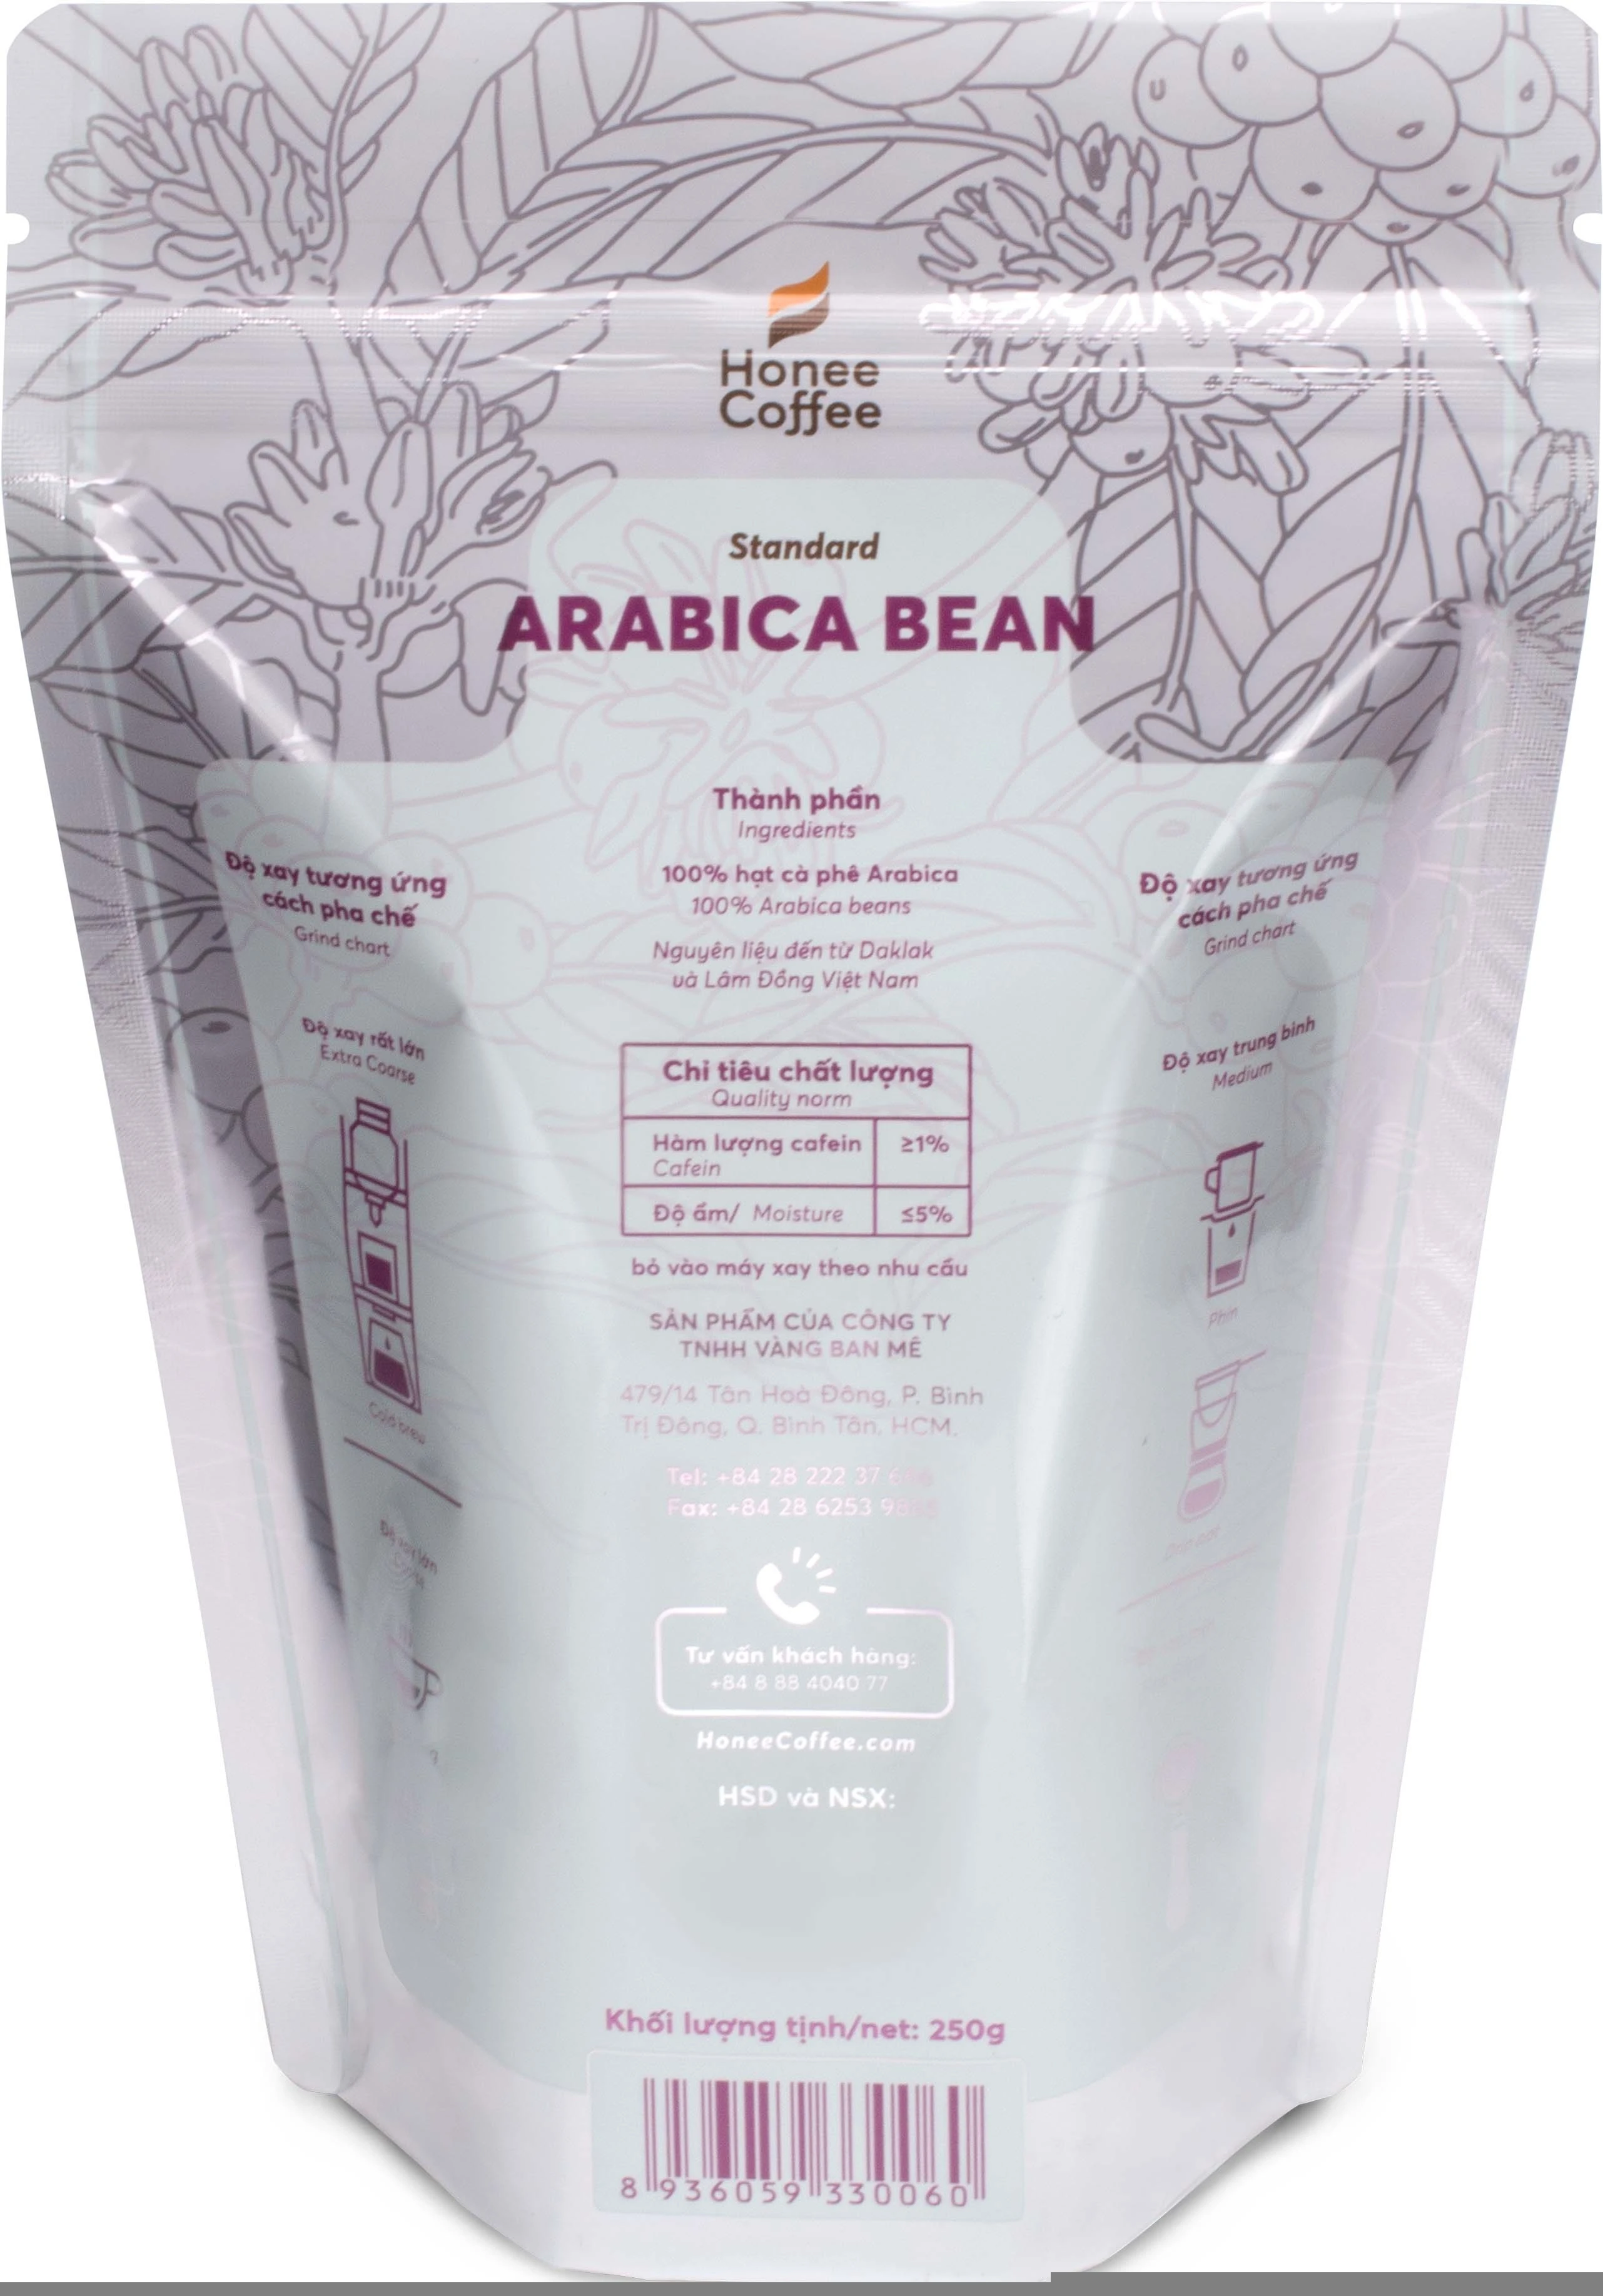 Honee Coffee - Vietnam Arabica coffee - Roasted coffee beans high quality 2020